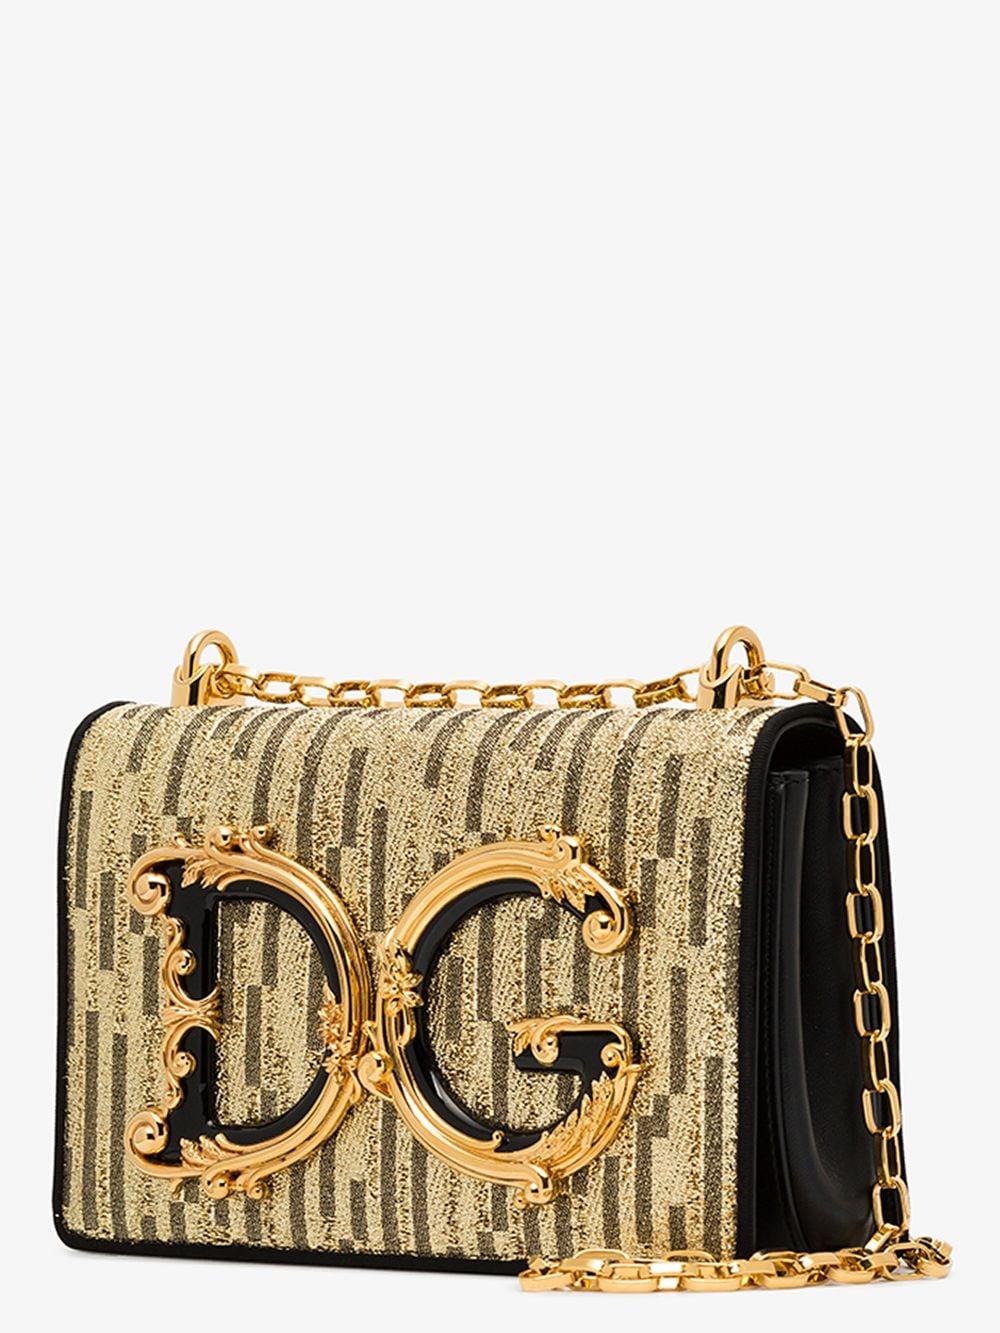 Dolce & Gabbana D&g Girls Shoulder Bag in Metallic | Lyst